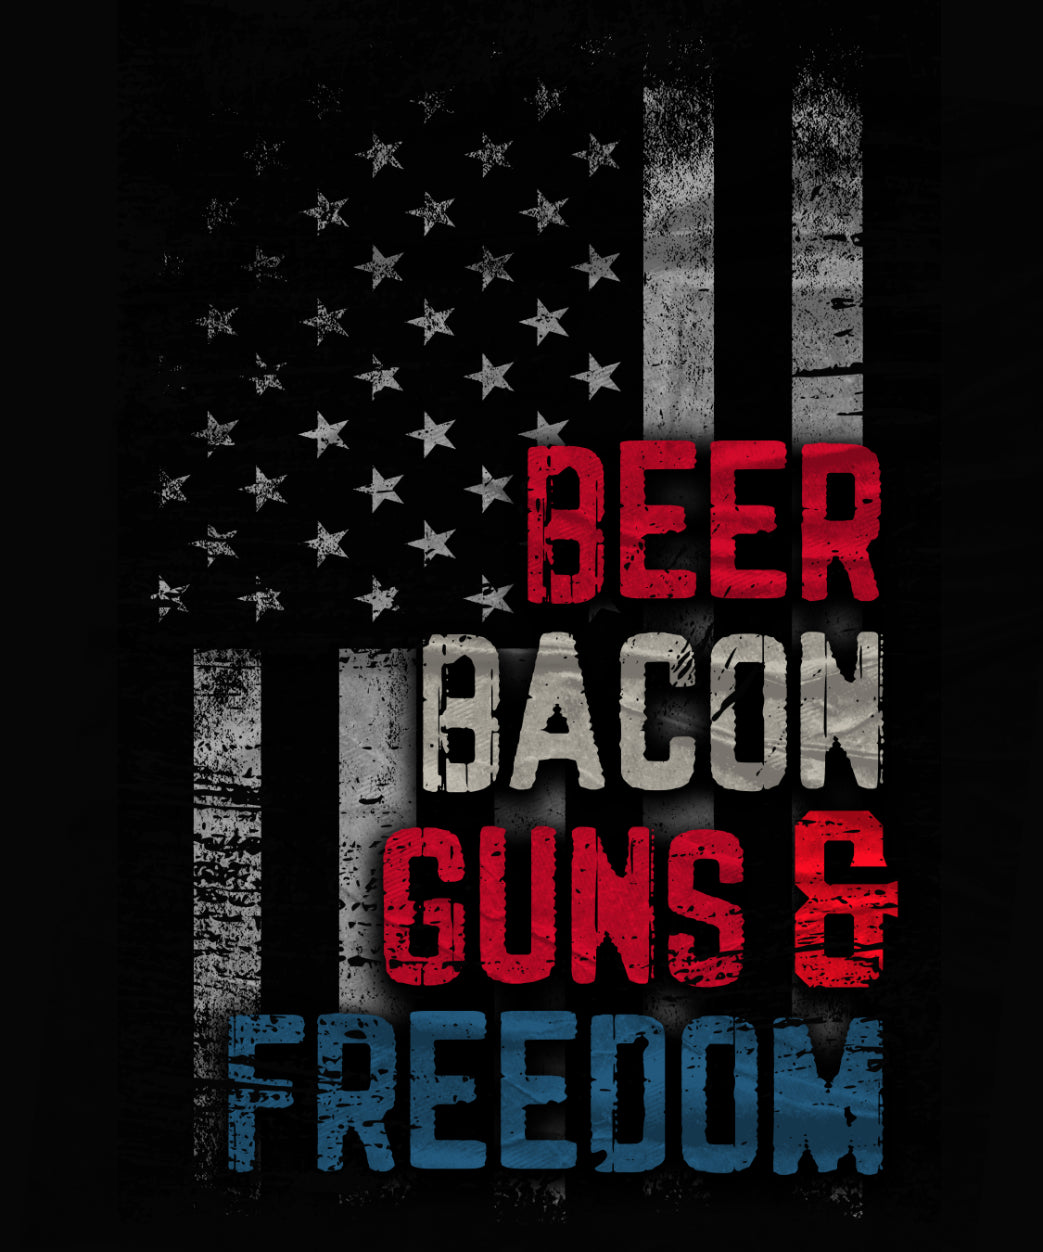 Beer, Bacon, Guns & Freedom V2